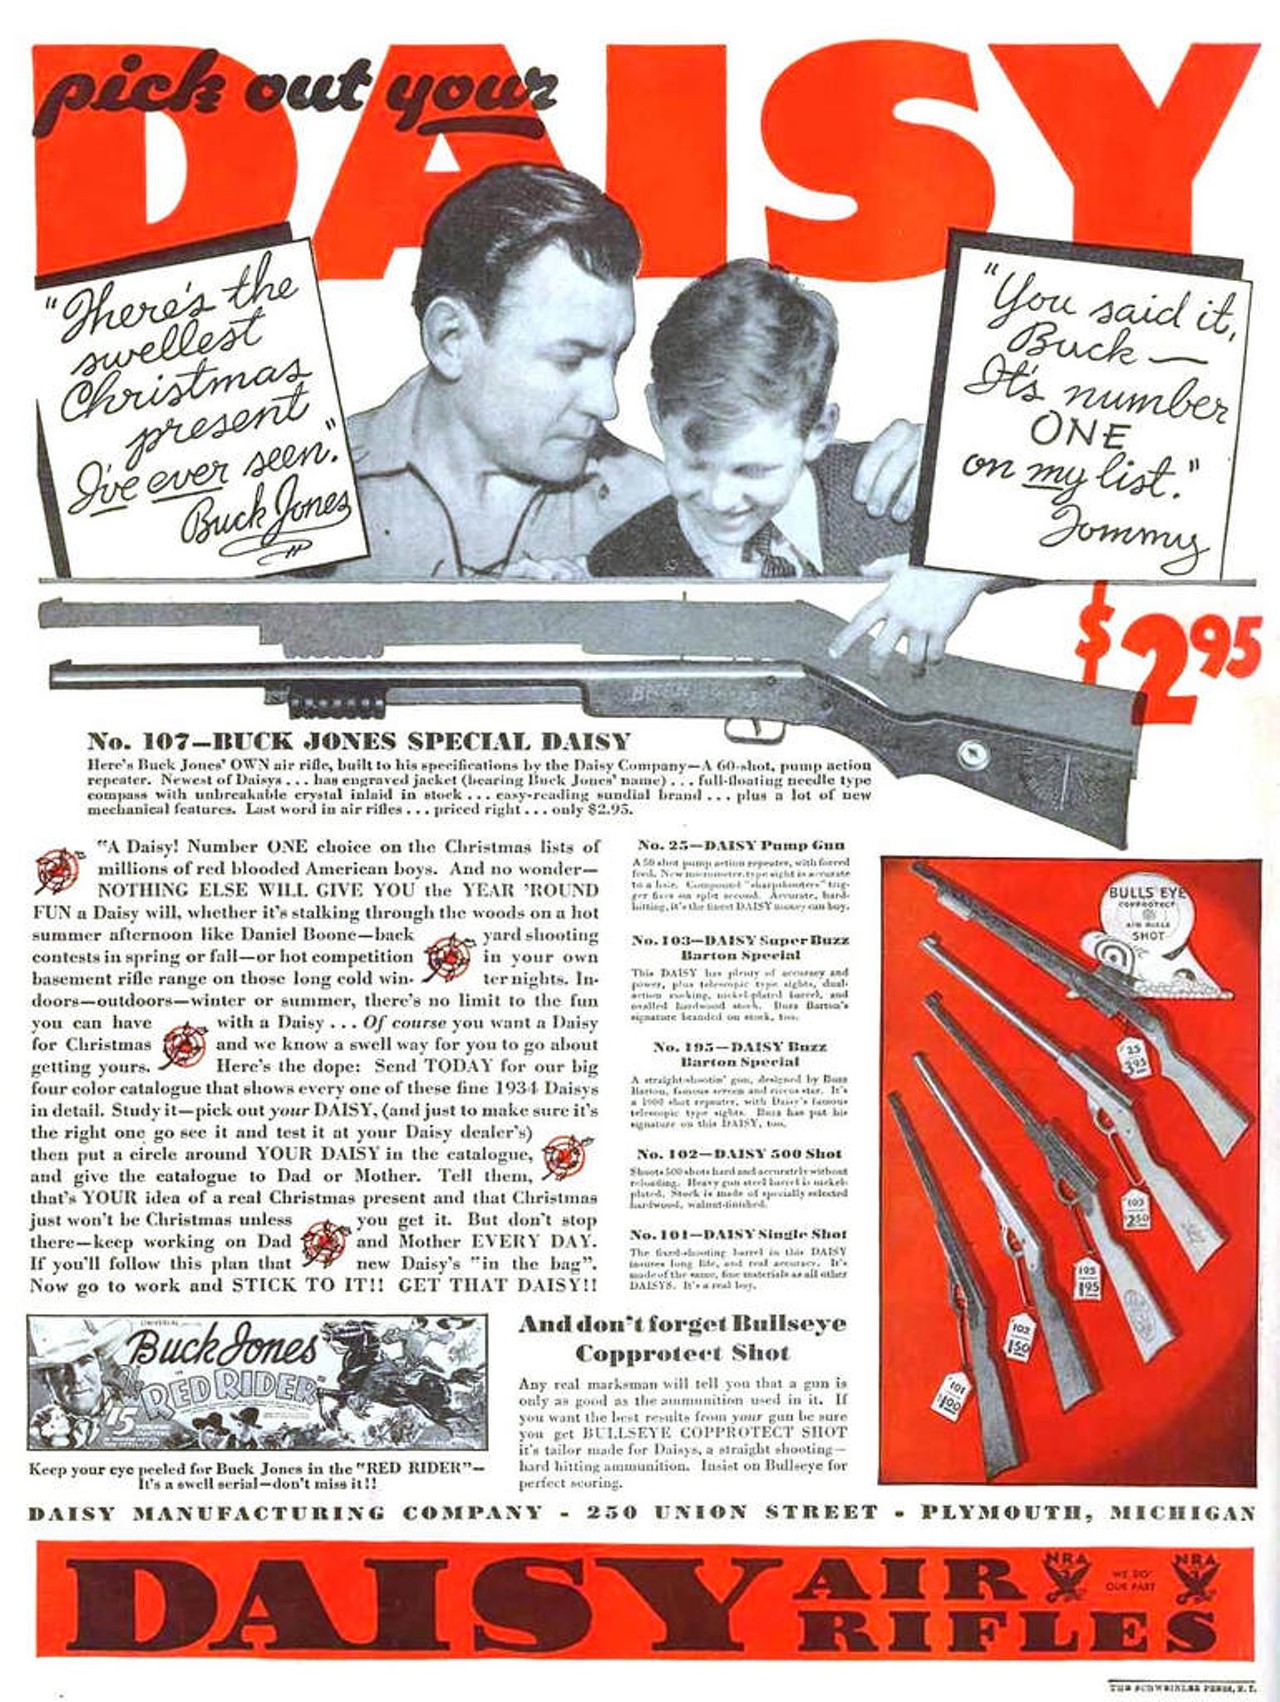 Buck Jones for Special Daisy Rifle Christmas ad, 1934